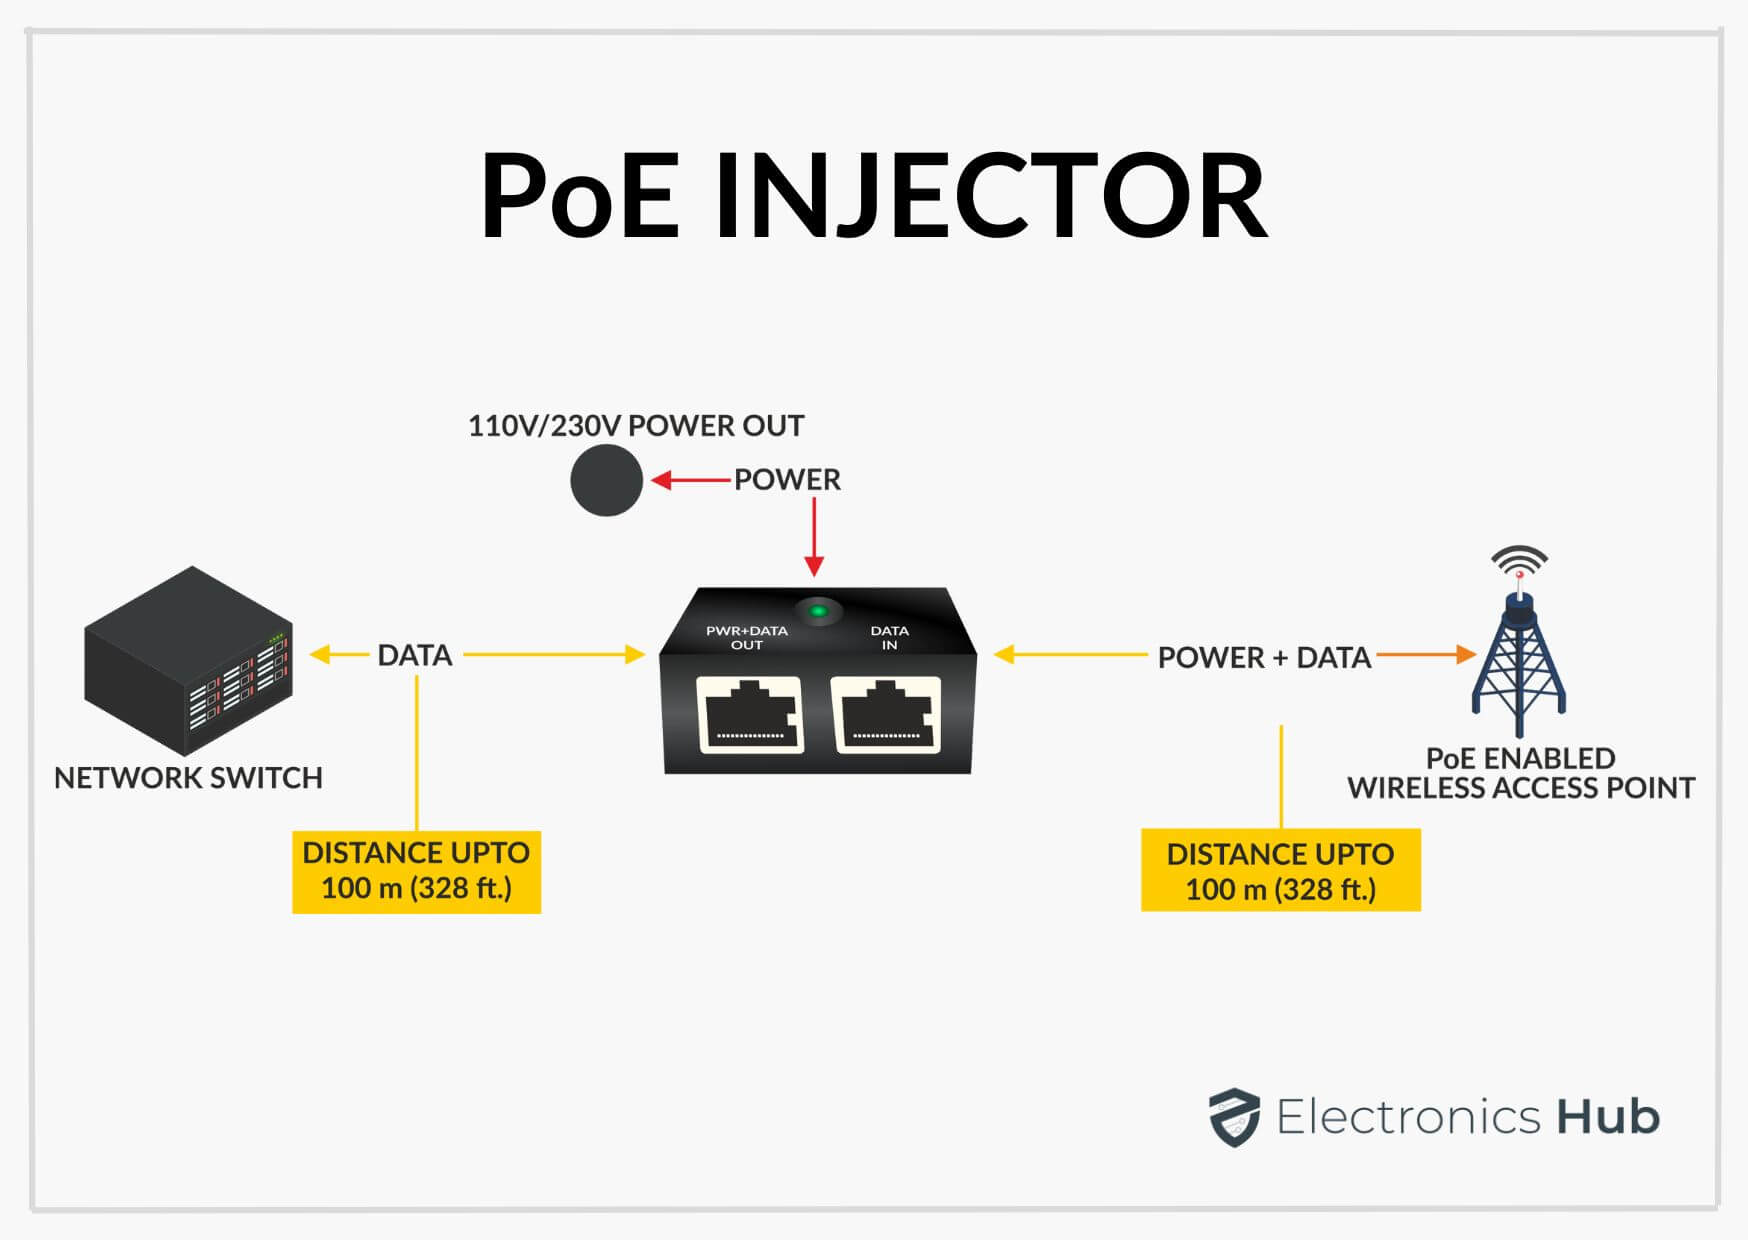 PoE Injector vs PoE Splitter 